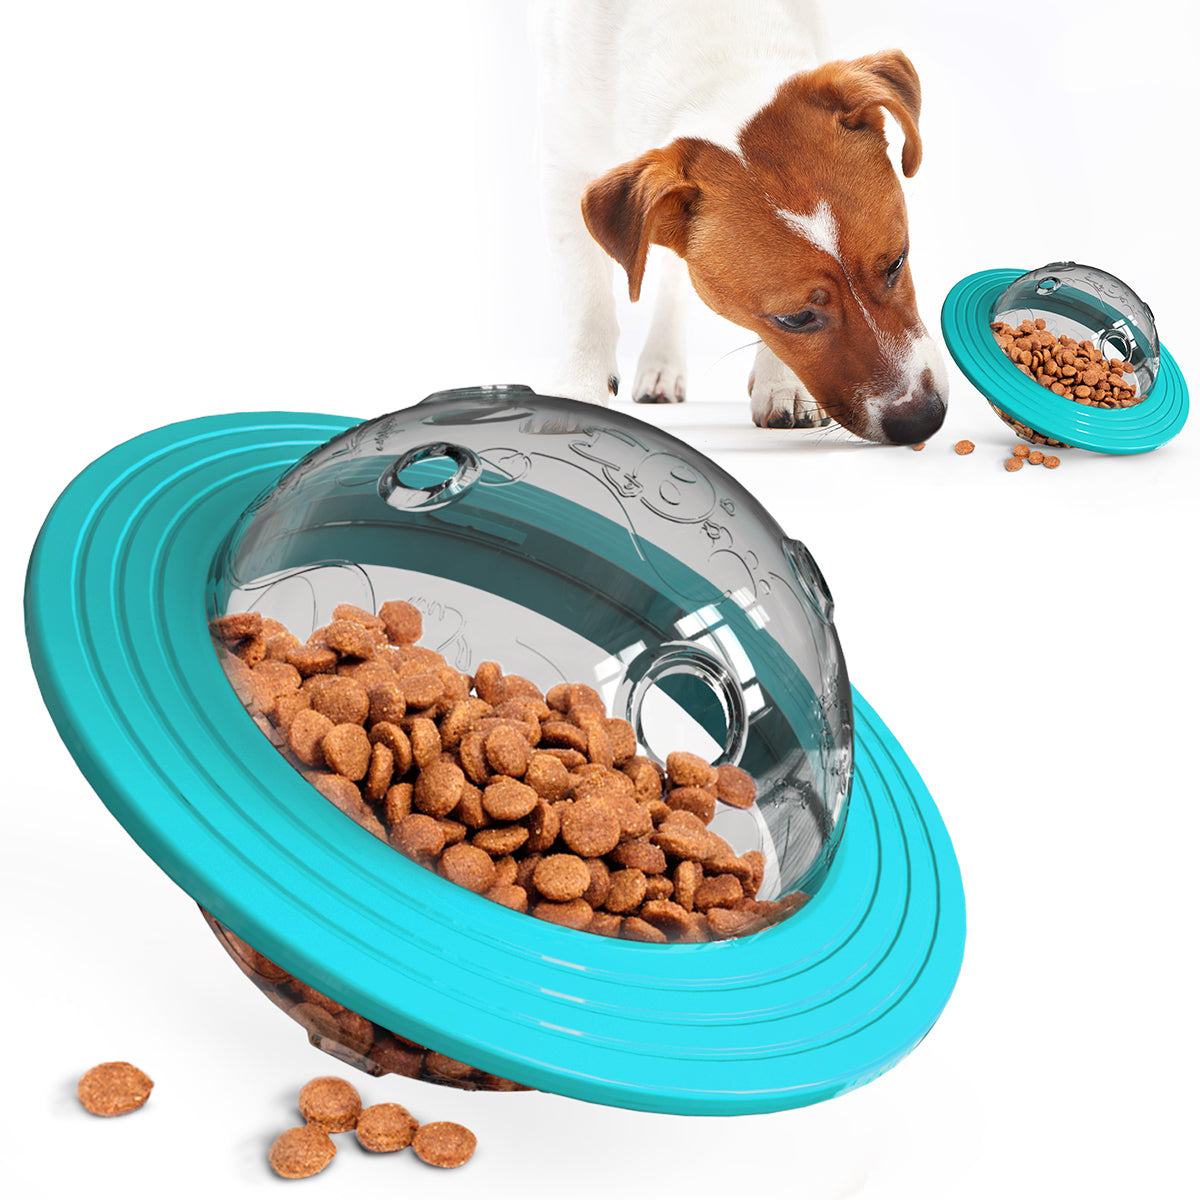 Pet Supplies : HANAMYA Dog Food/Treats Dispensing Container Toy